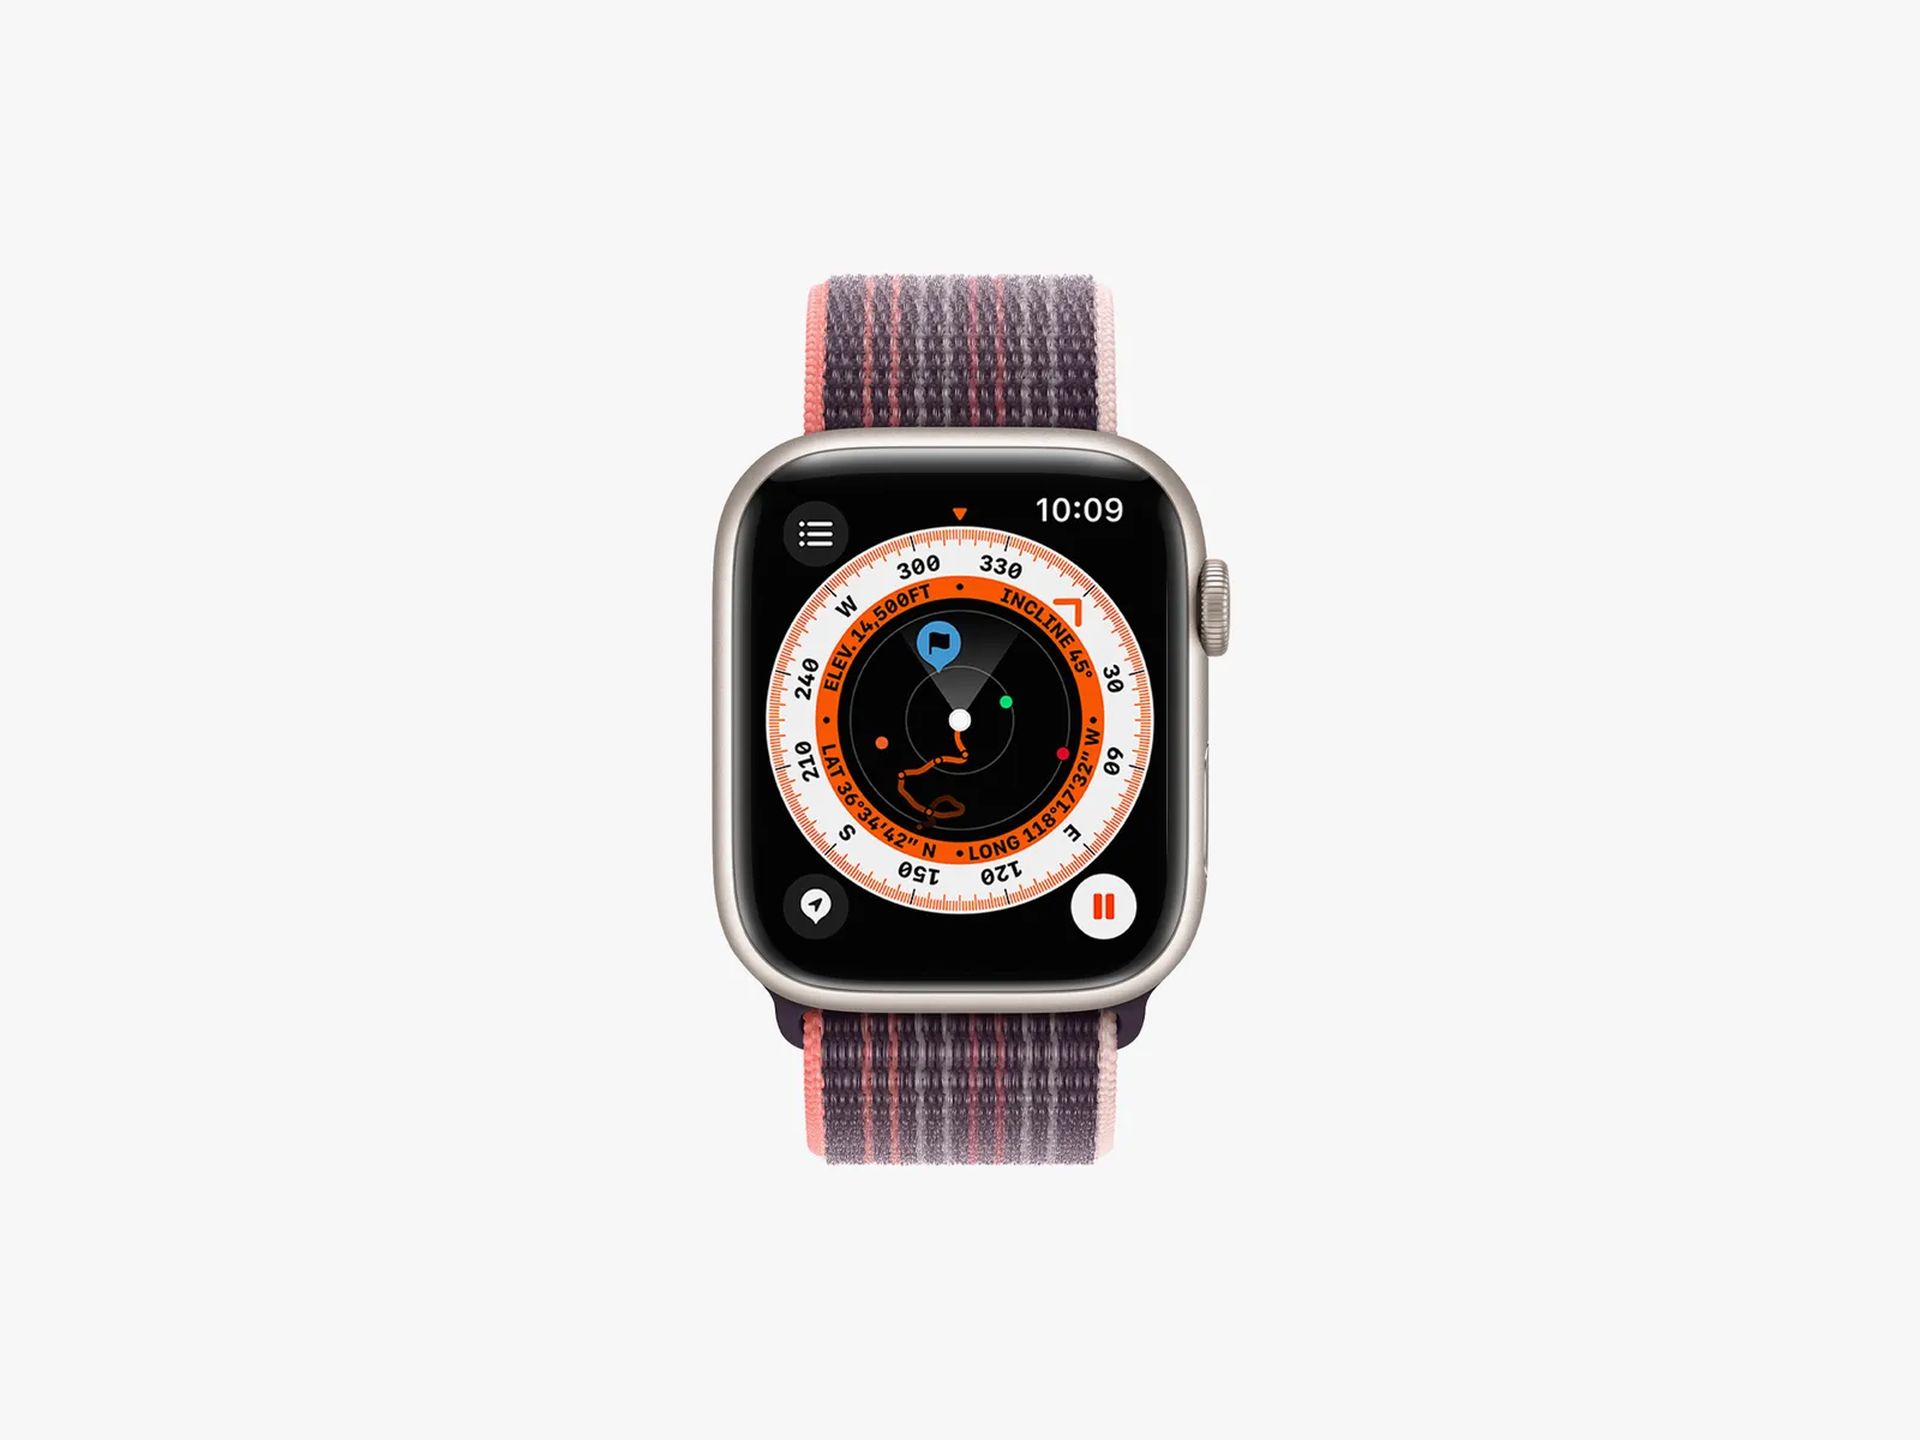 New watchOS 9 features